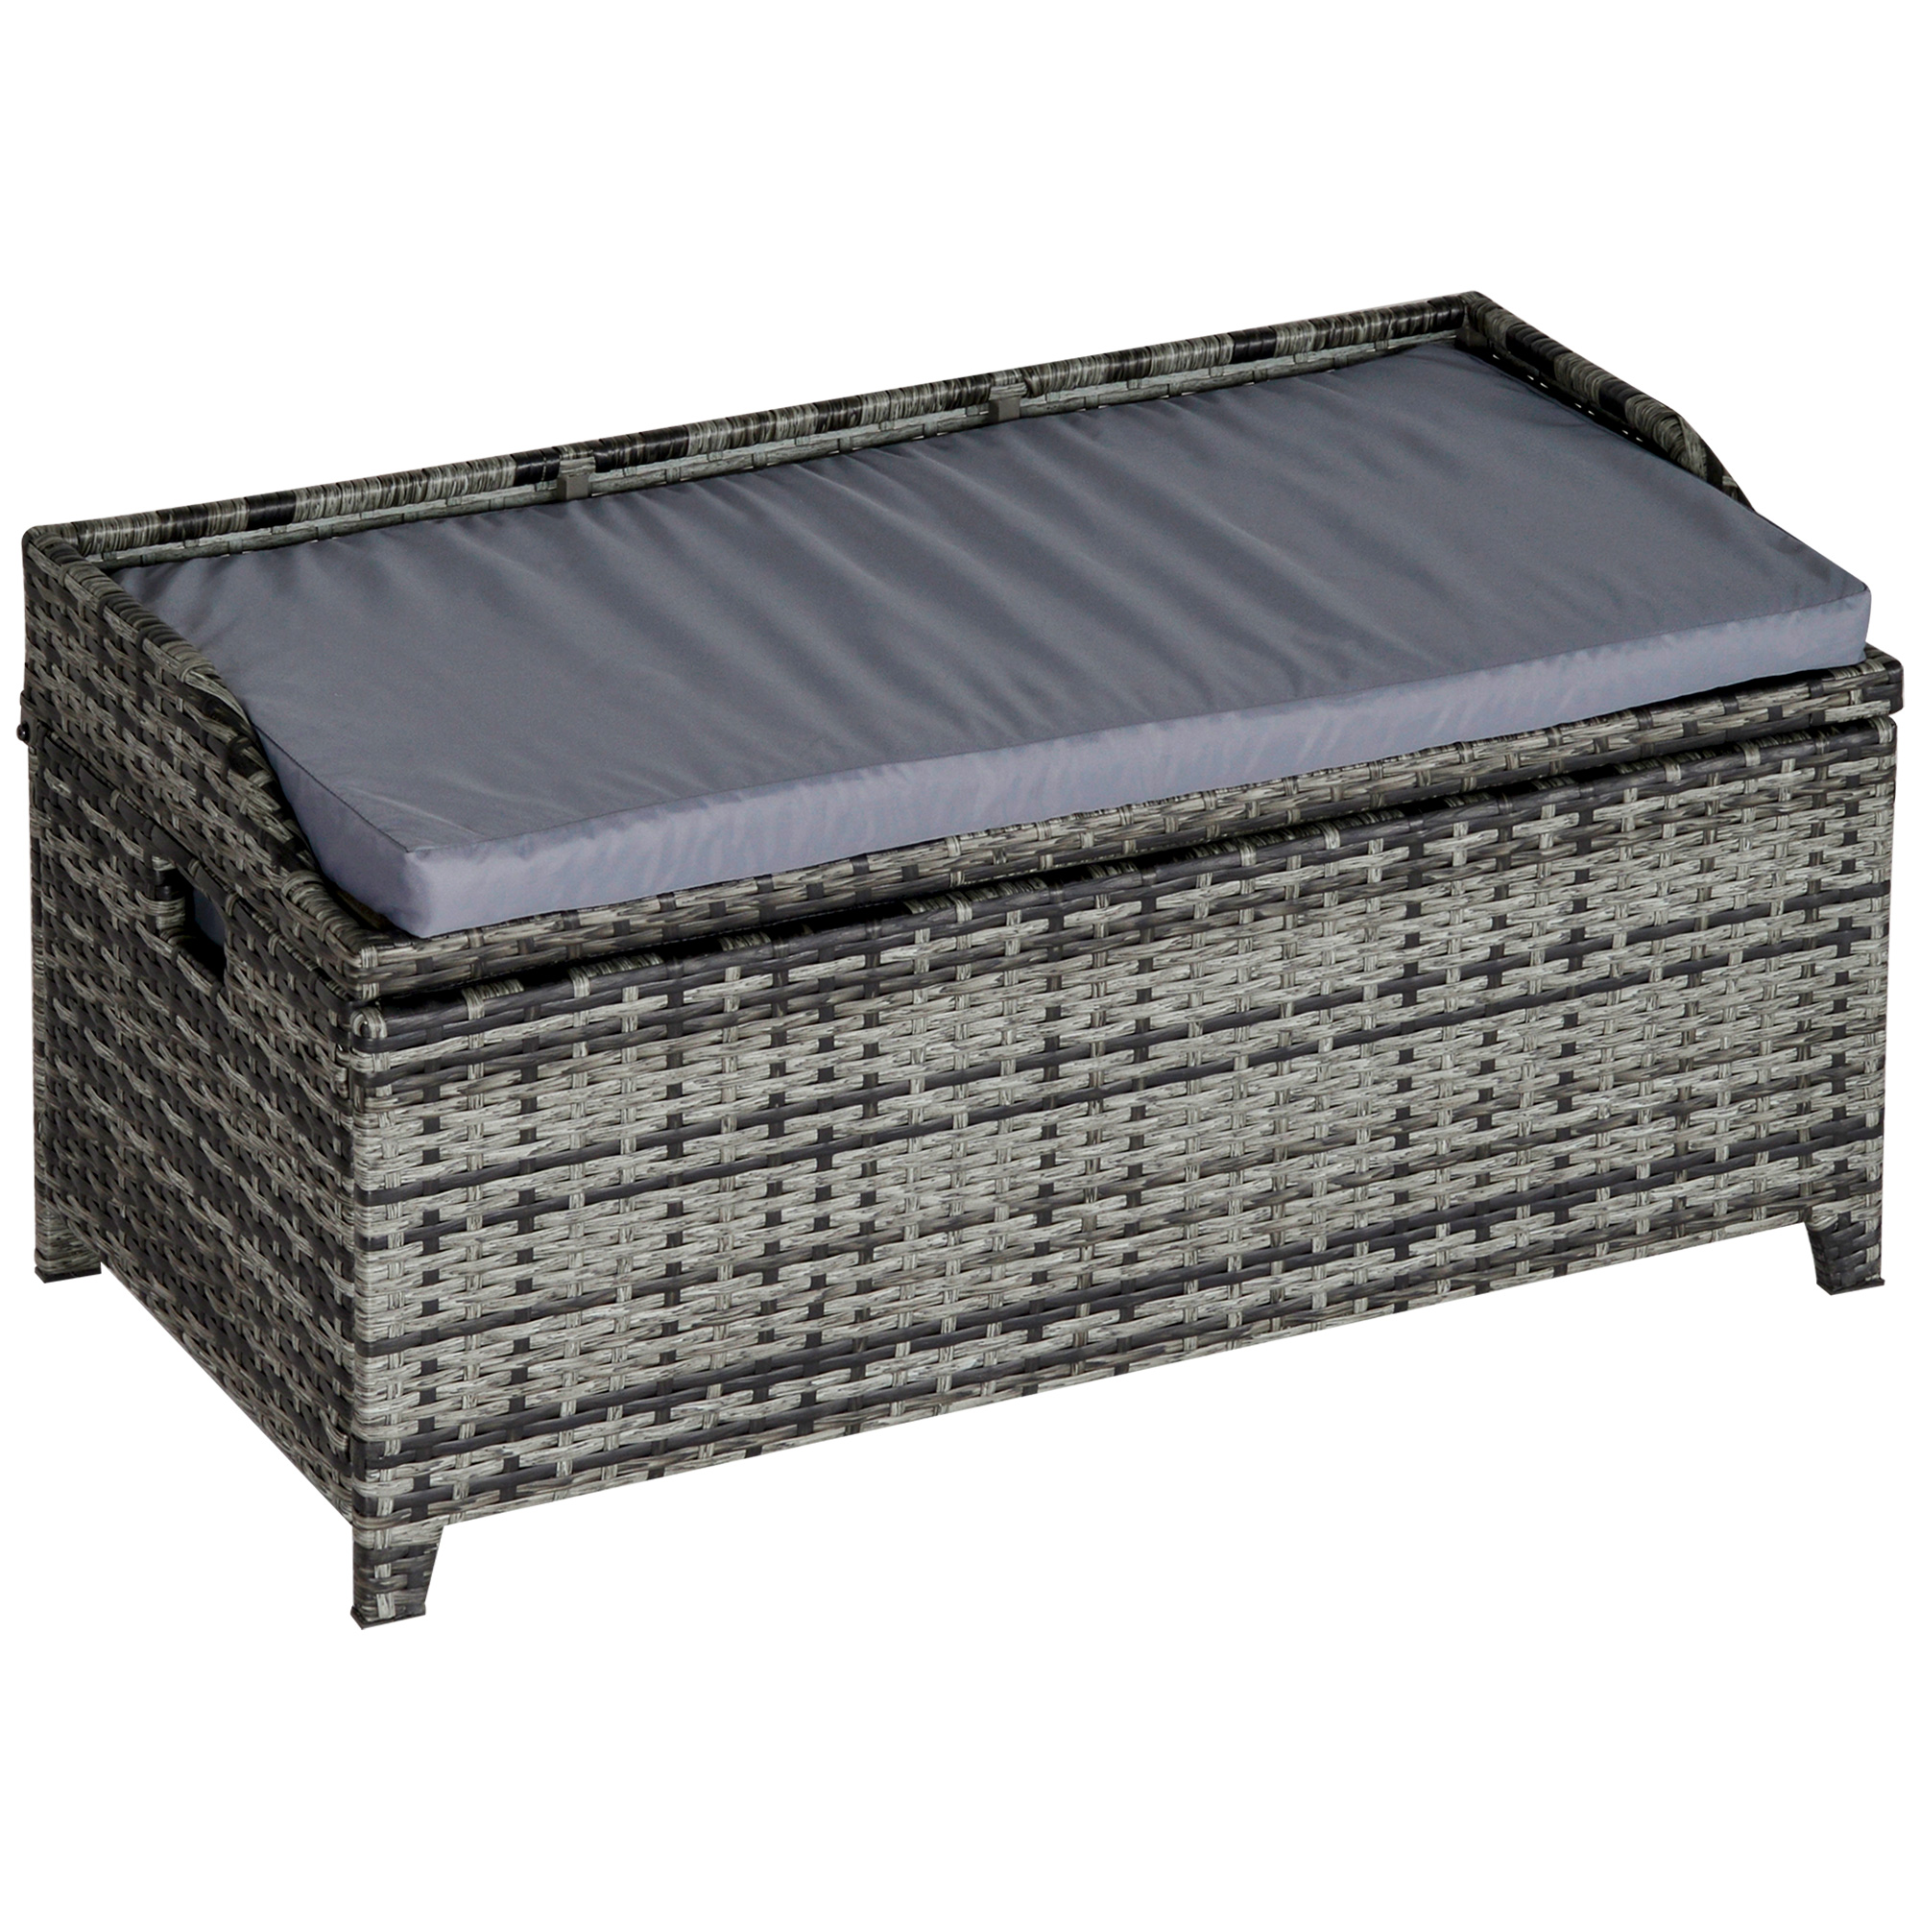 Outsunny Patio PE Rattan Wicker Storage Basket Box Bench Seat Furniture w/ Cushi